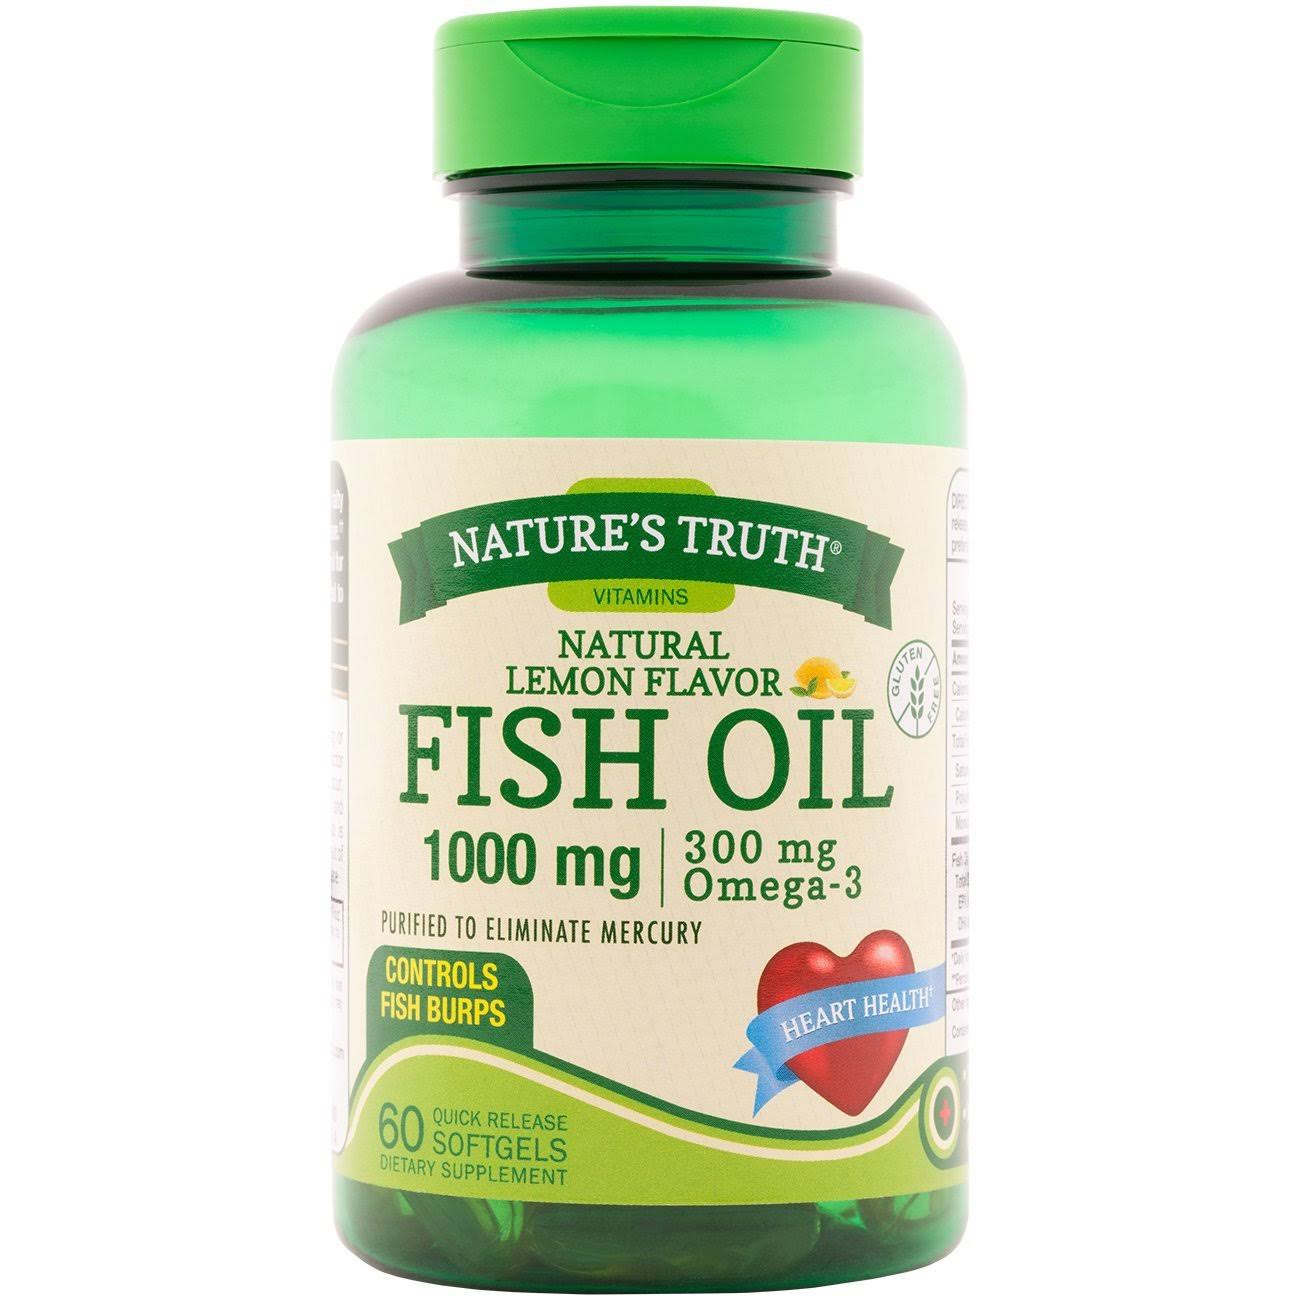 Nature's Truth Fish Oil Supplement - Lemon Flavor, 60 Count